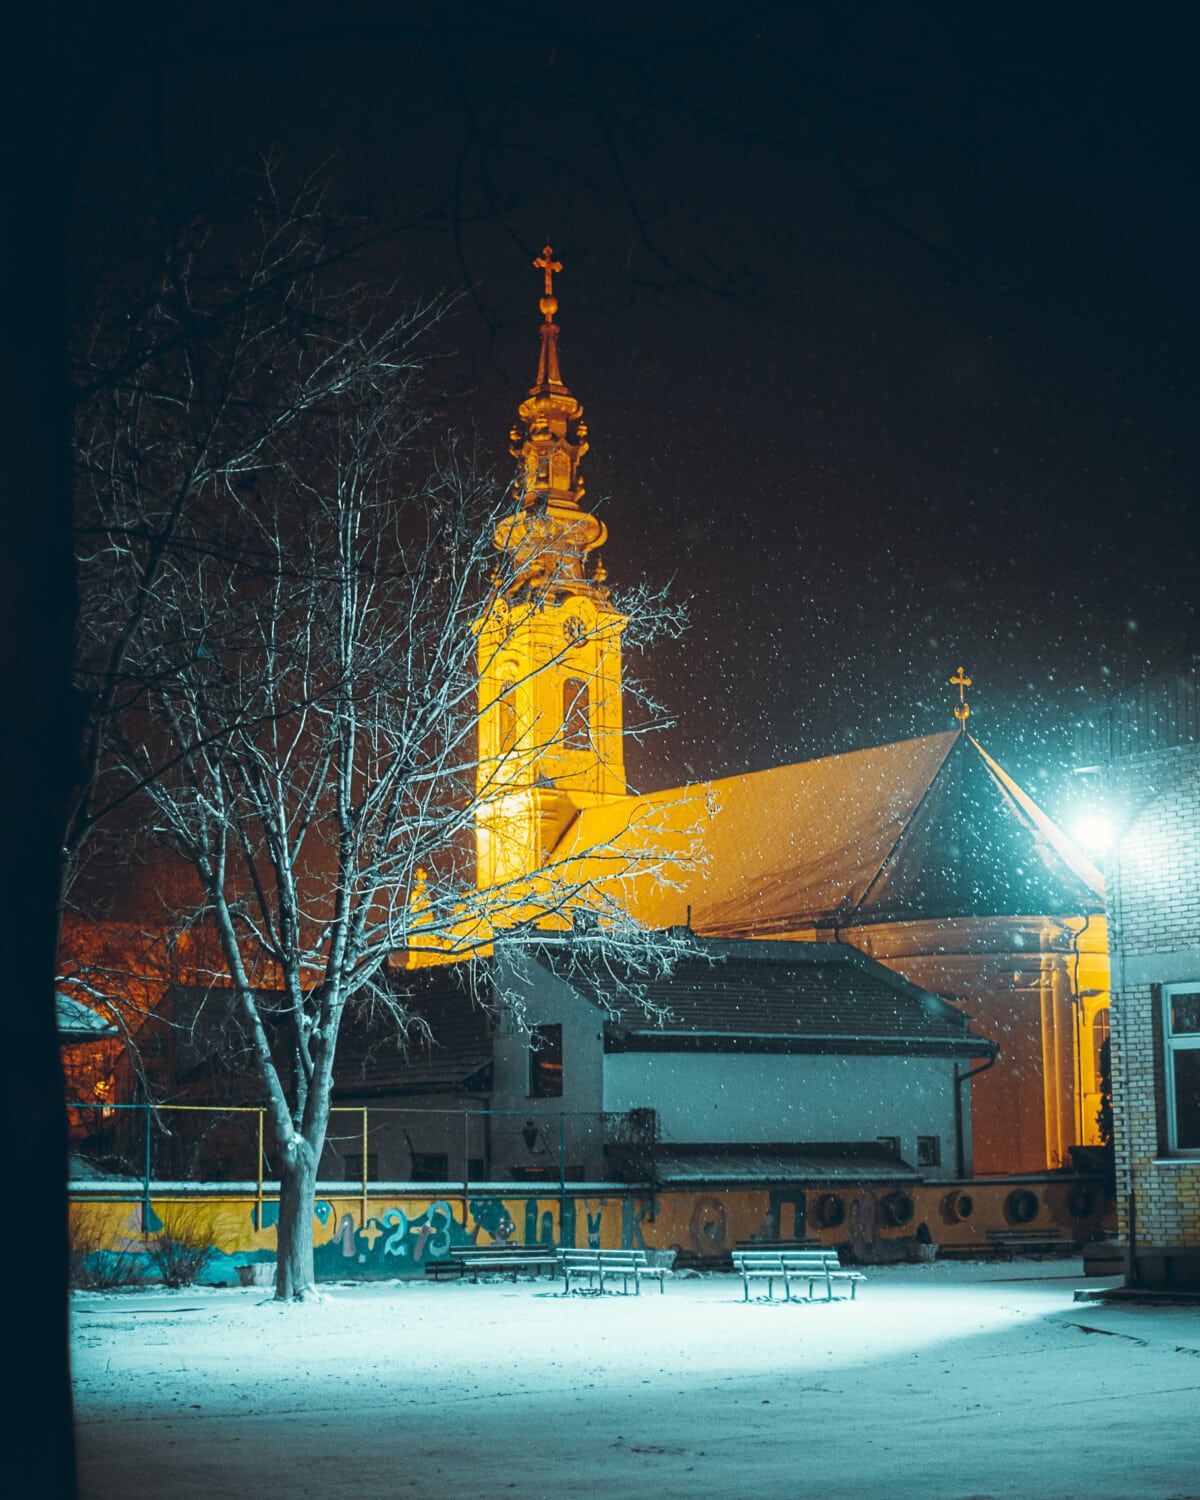 snowflakes, night, snowy, church, church tower, buildings, street, snow, winter, city